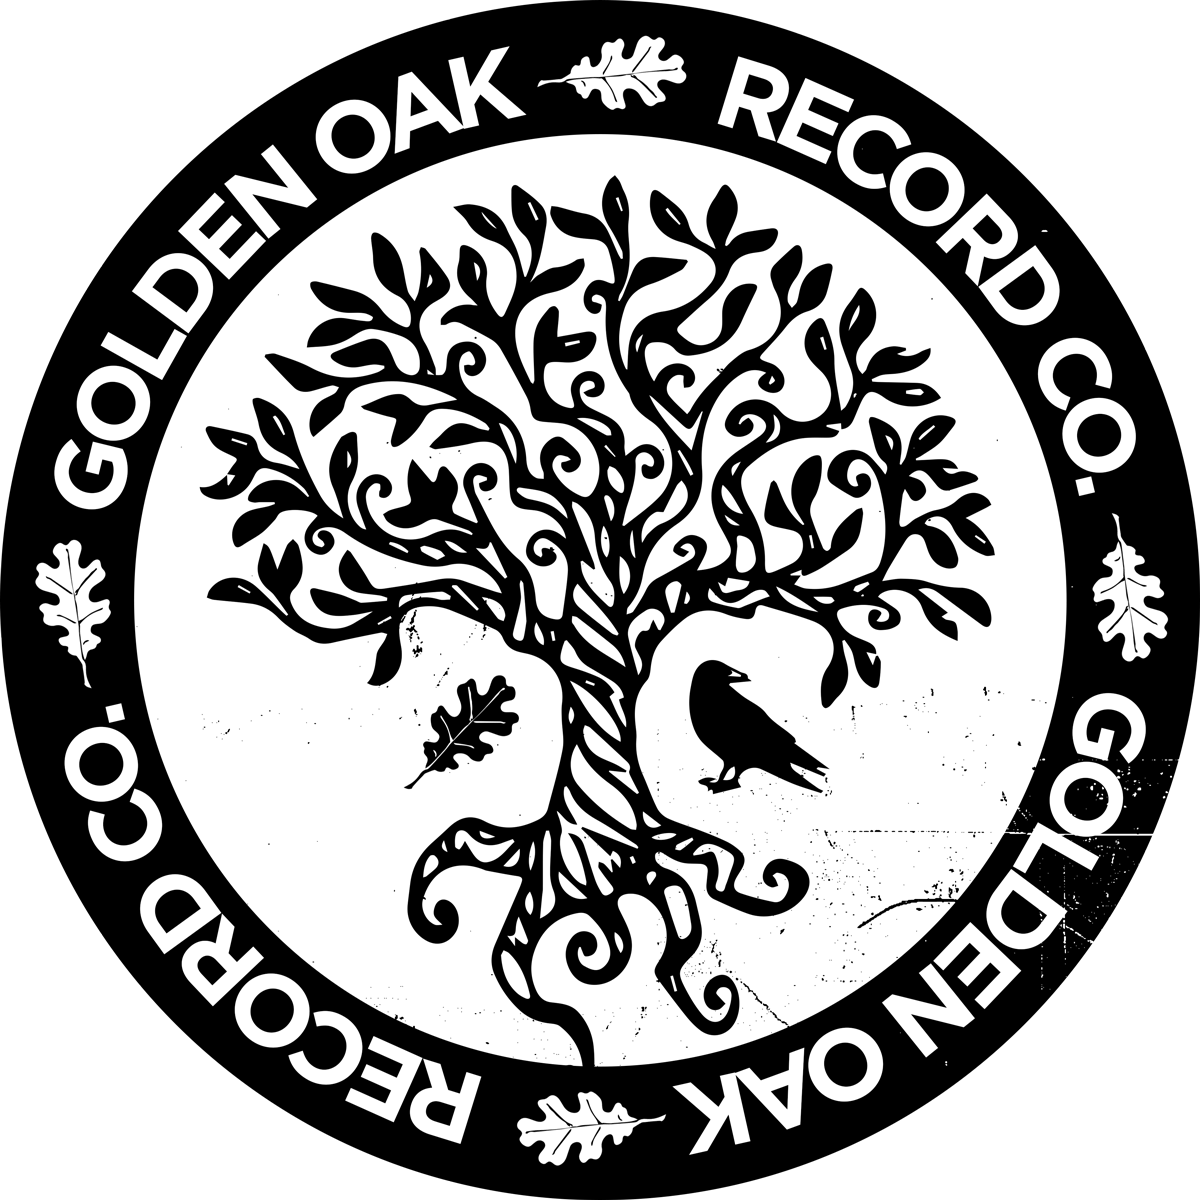 Golden Oak Record Co. Logo